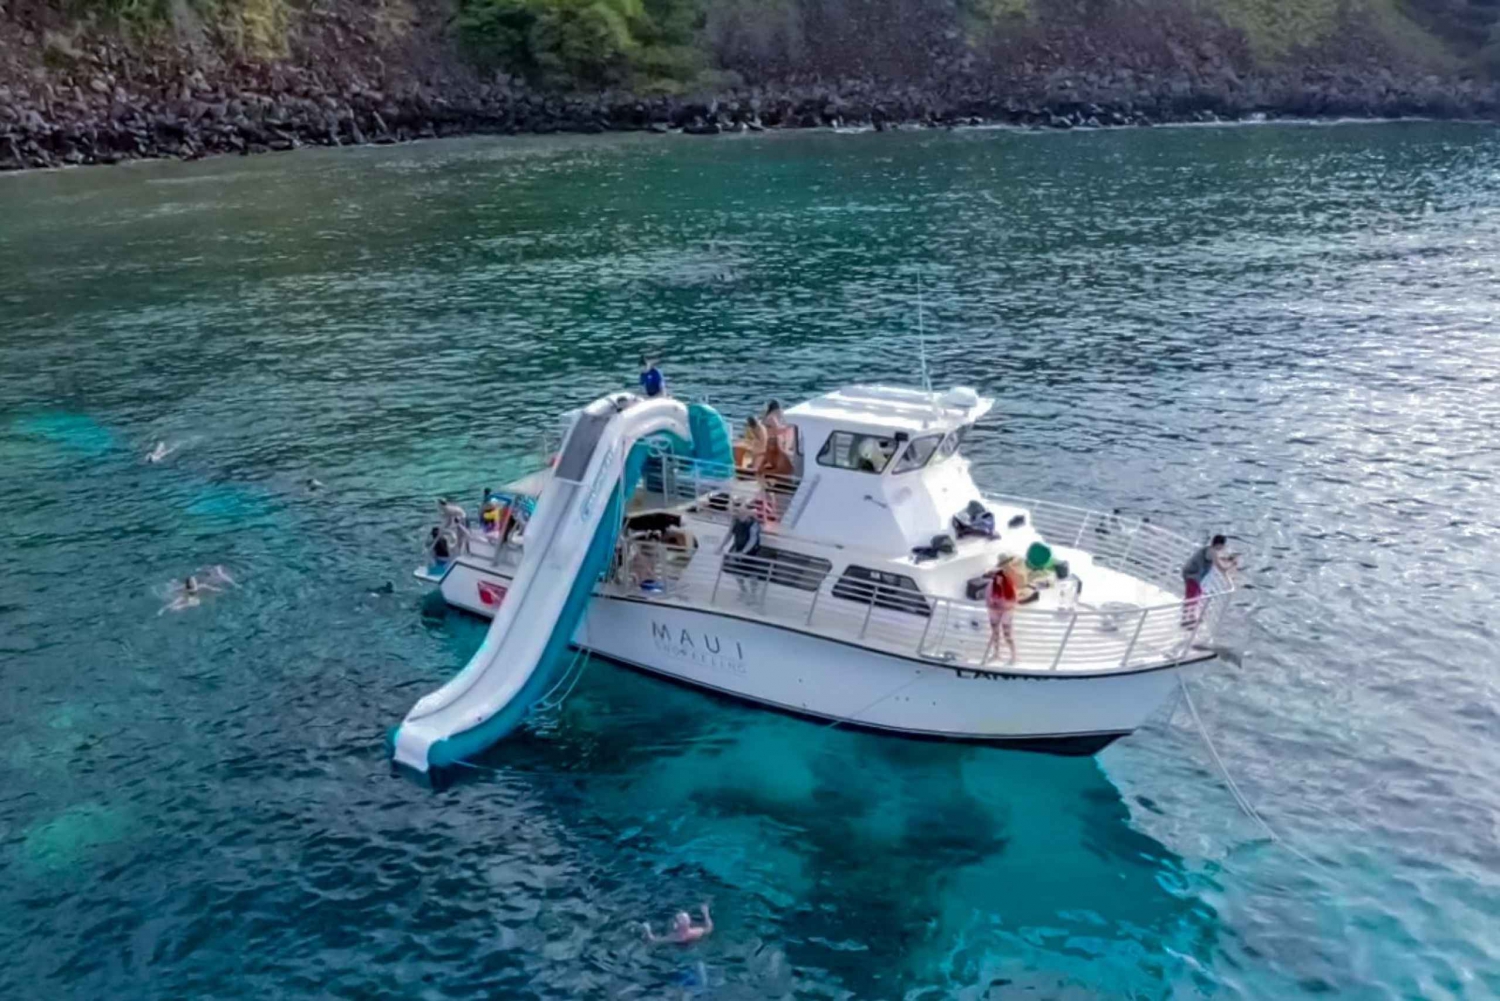 Maui Snorkel & Slide 1PM - 4PM